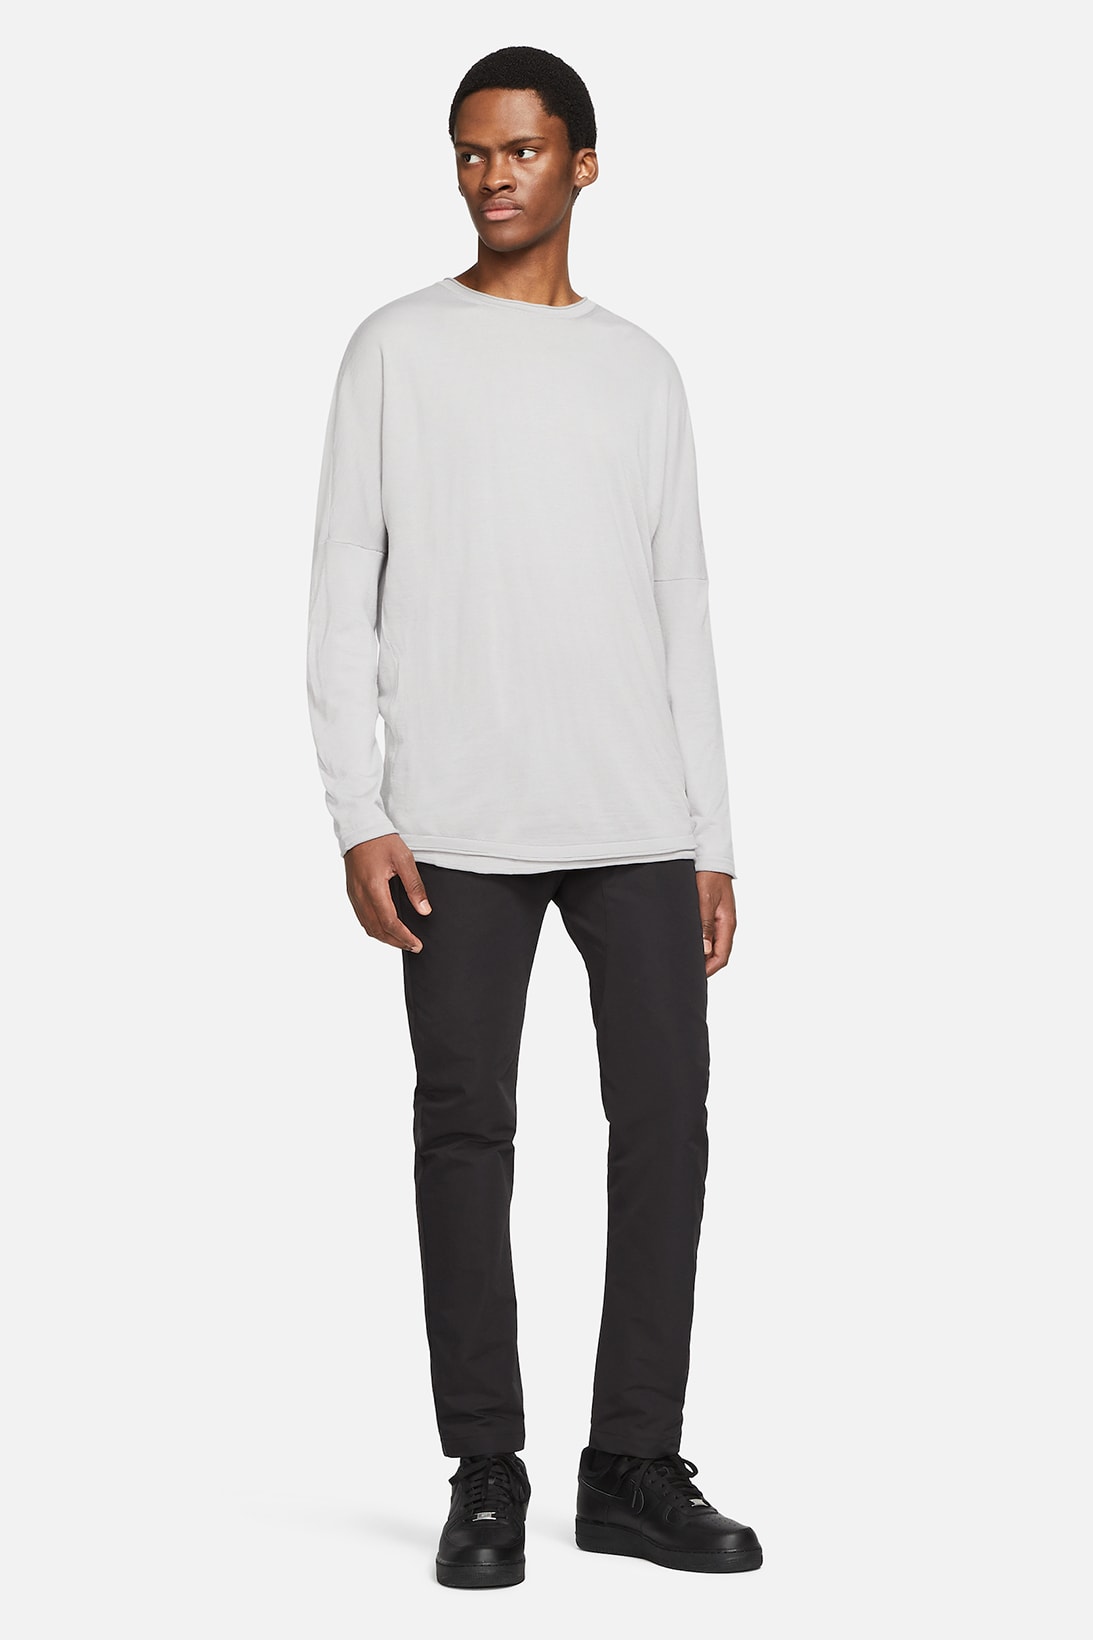 nike design exploration apparel collection long sleeve shirt pants